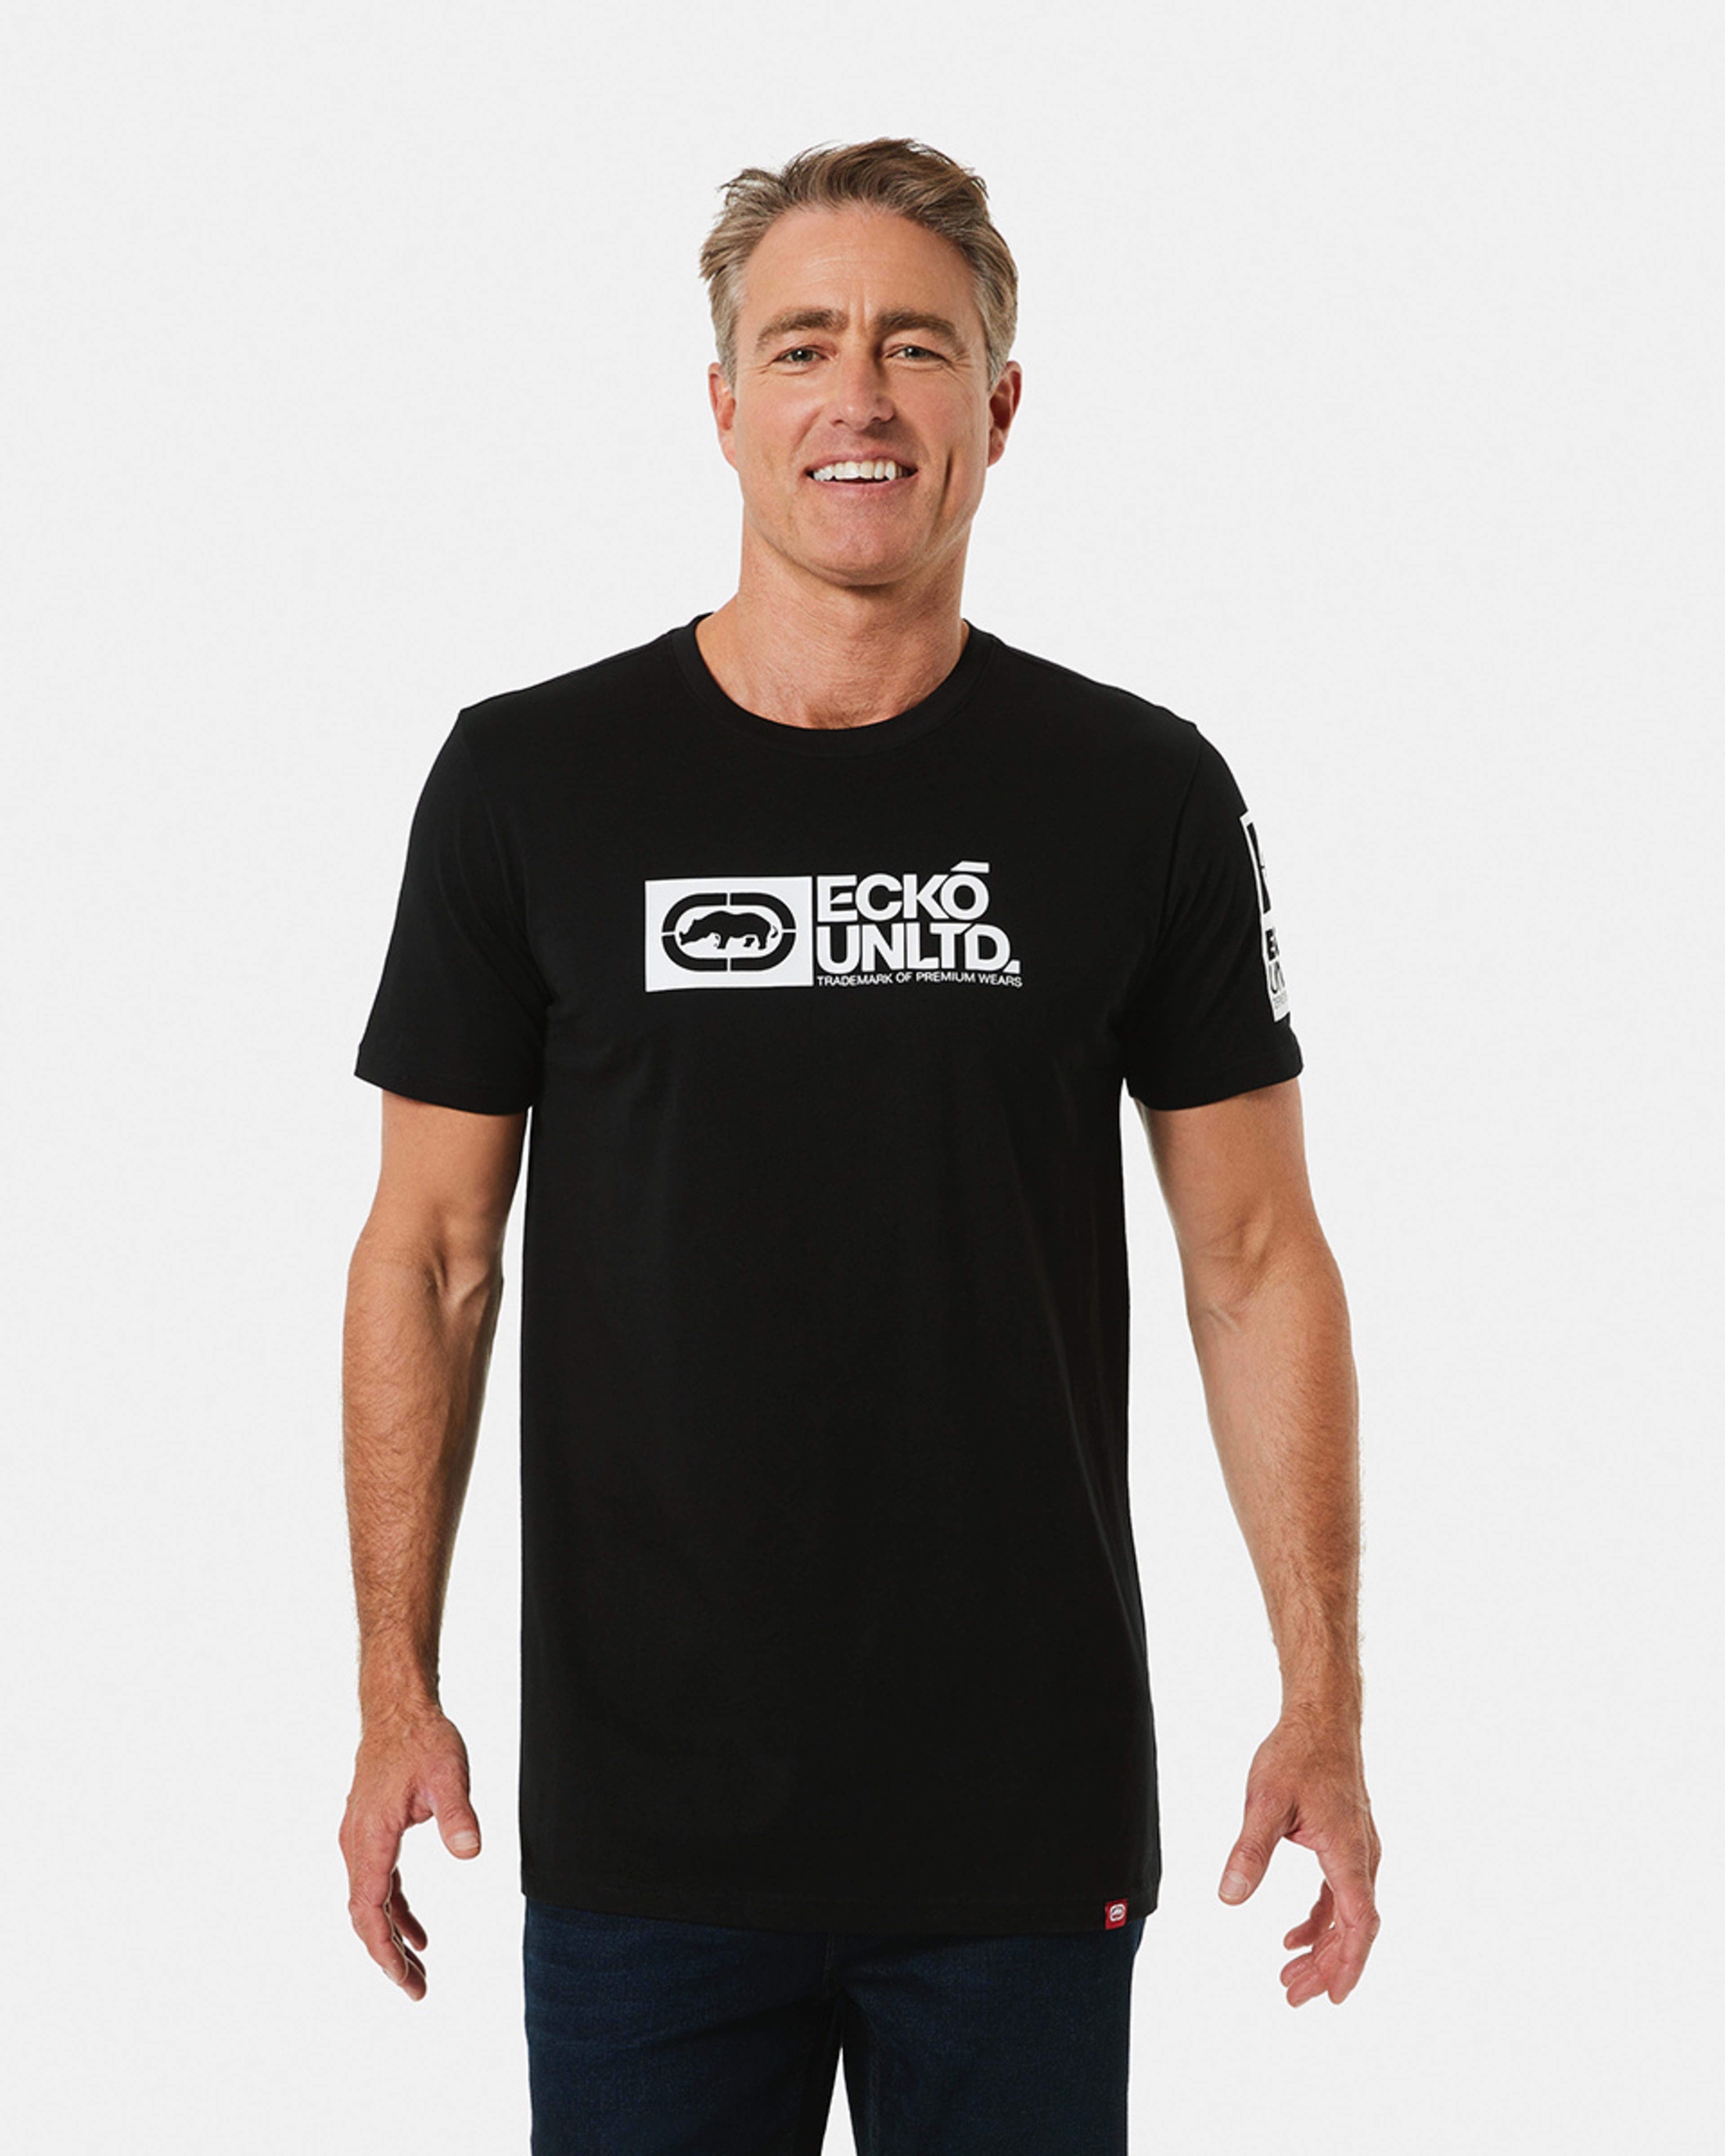 Ecko License Longline T-shirt - Kmart